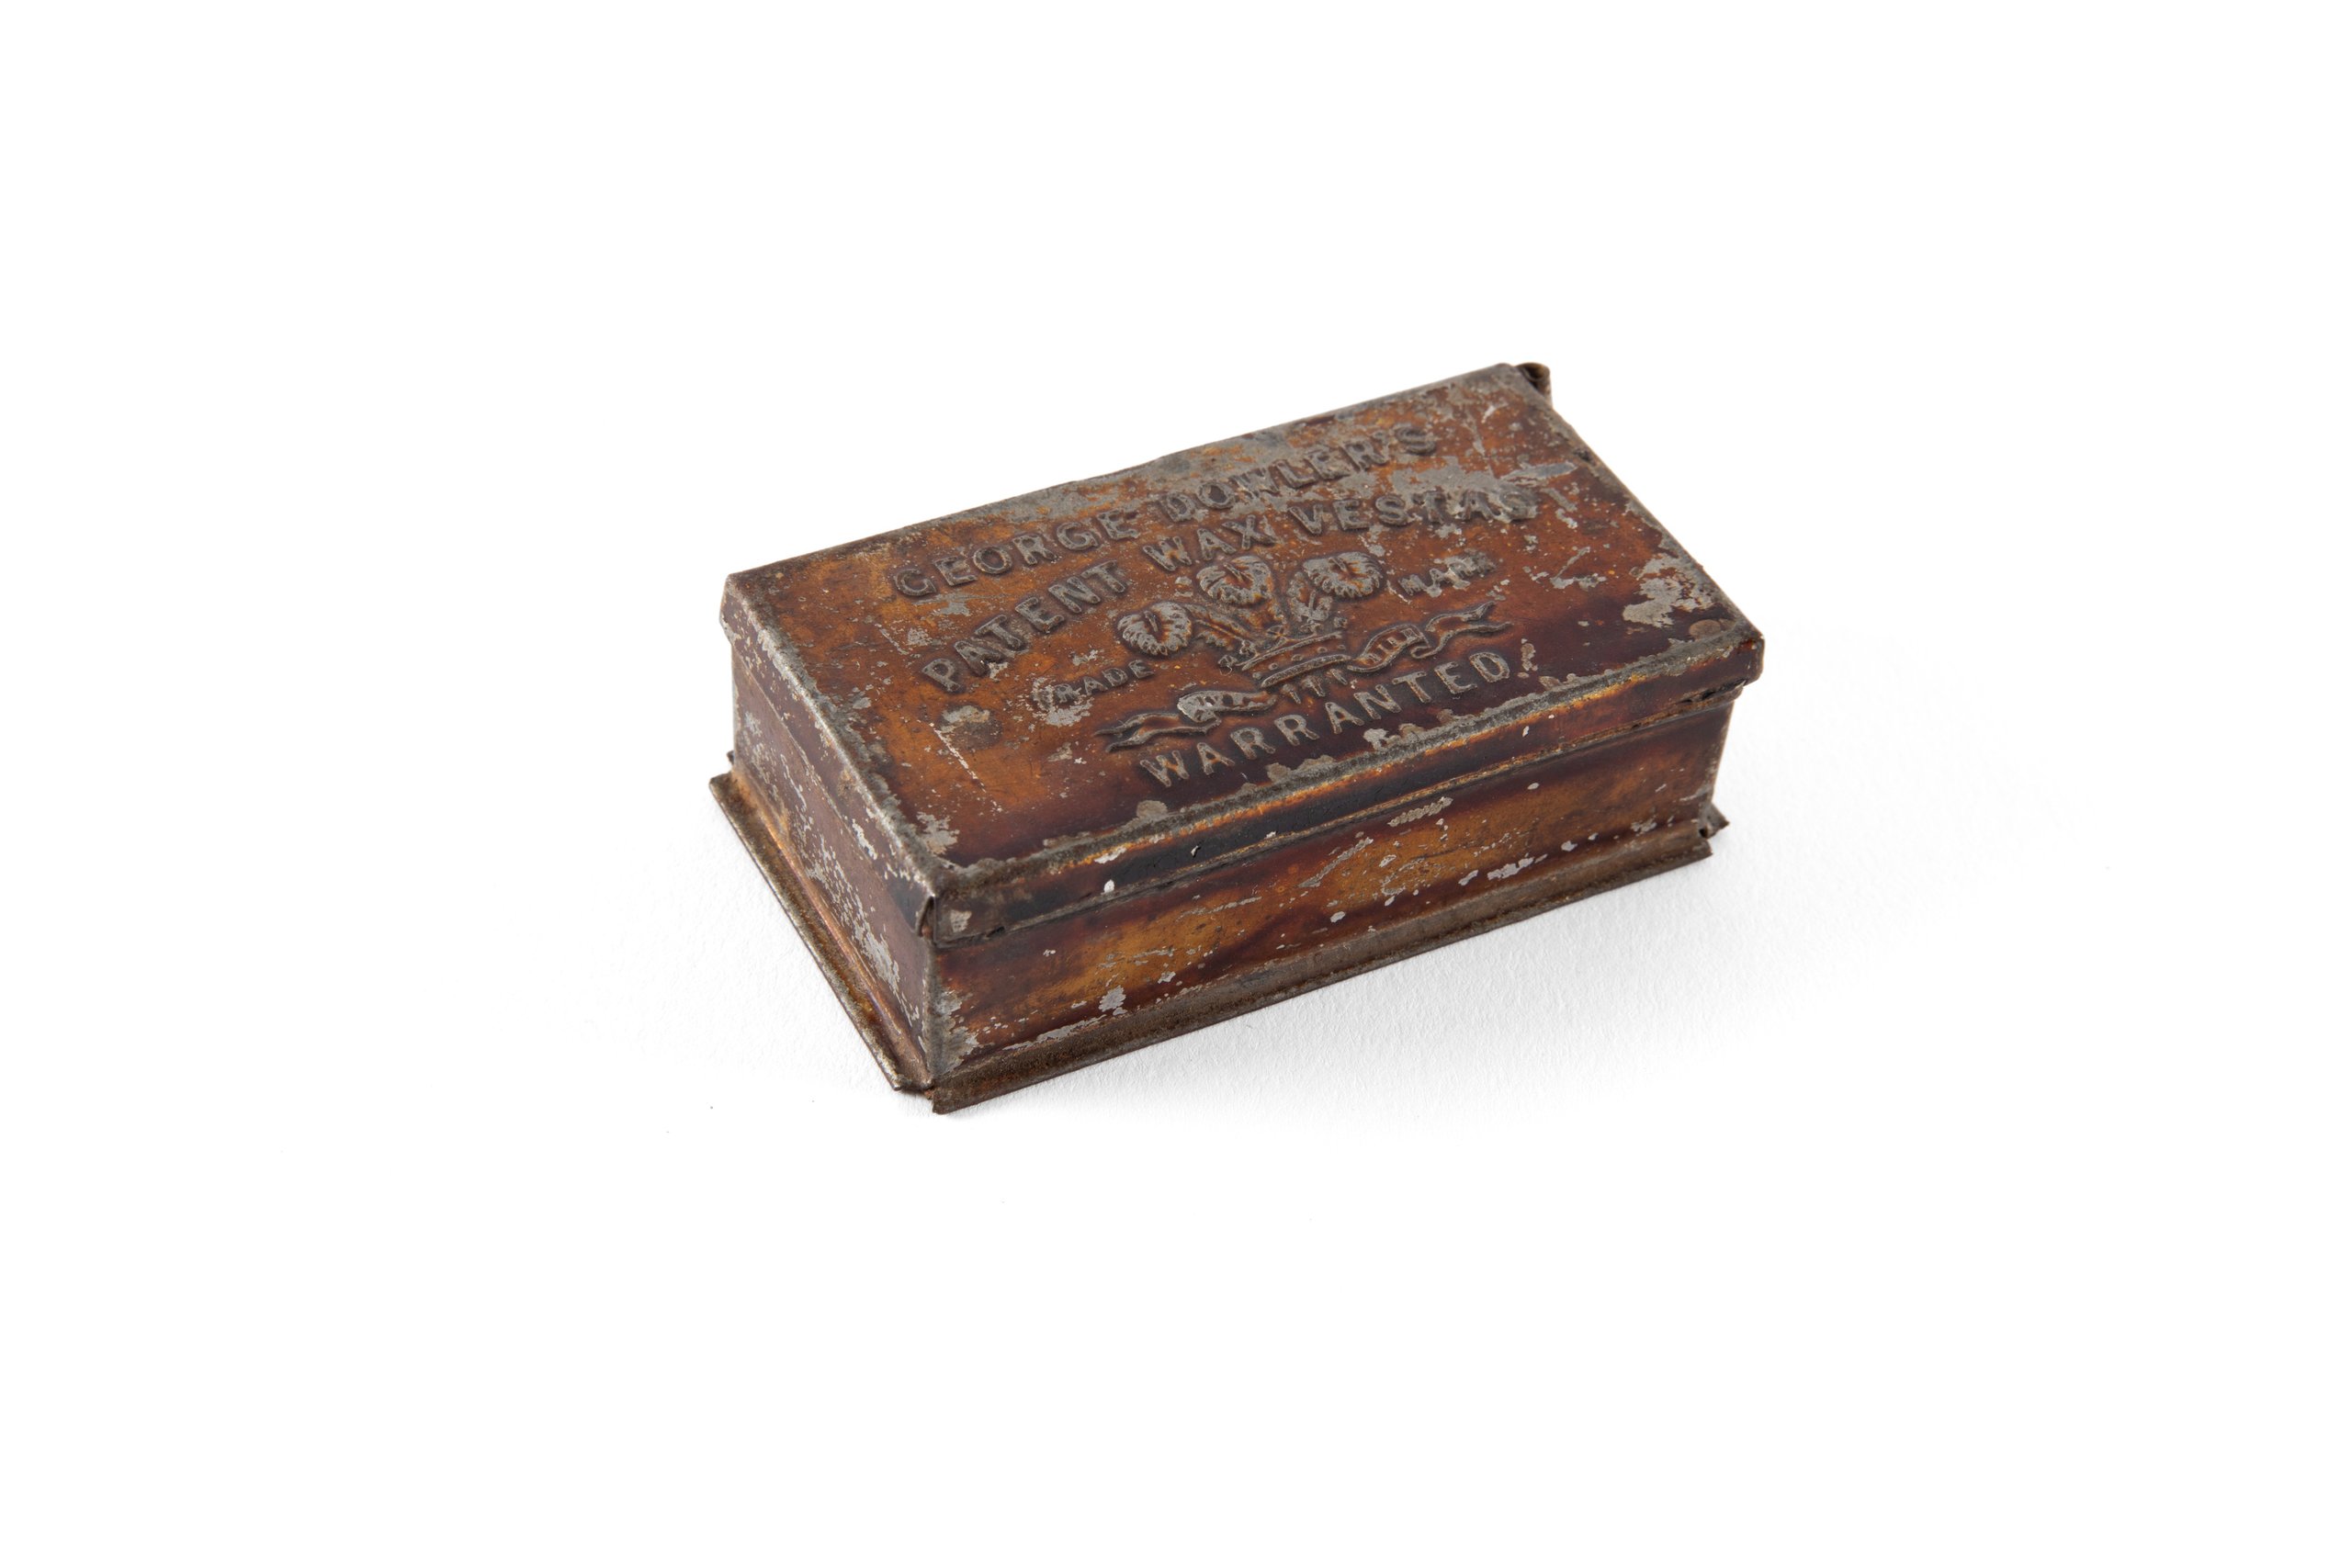 George Dowler's Patent Wax Vestas' matchbox